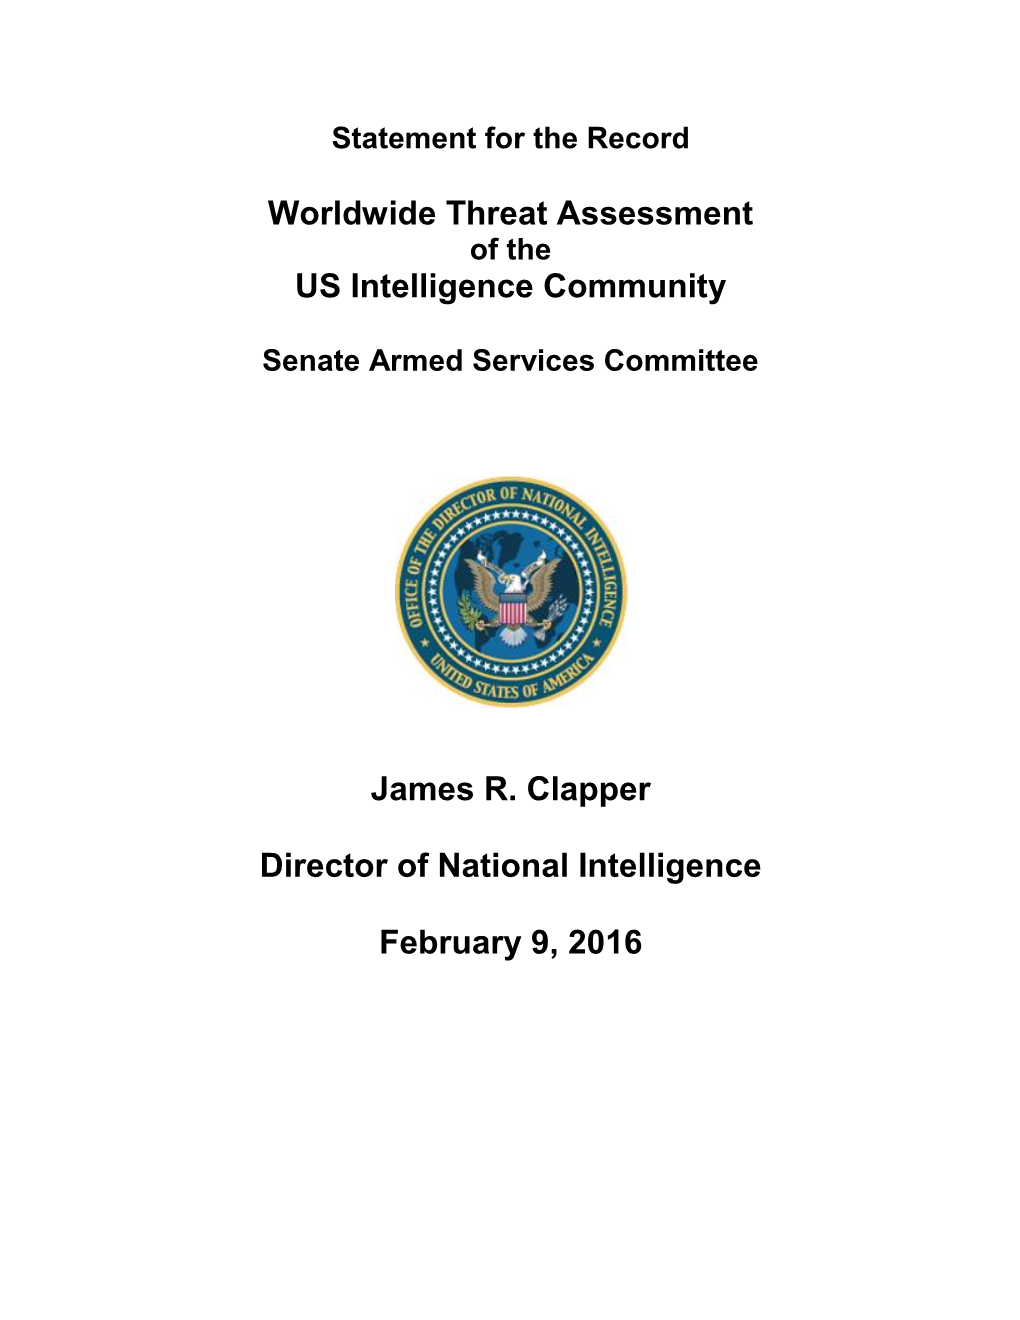 Worldwide Threat Assessment of the US Intelligence Community